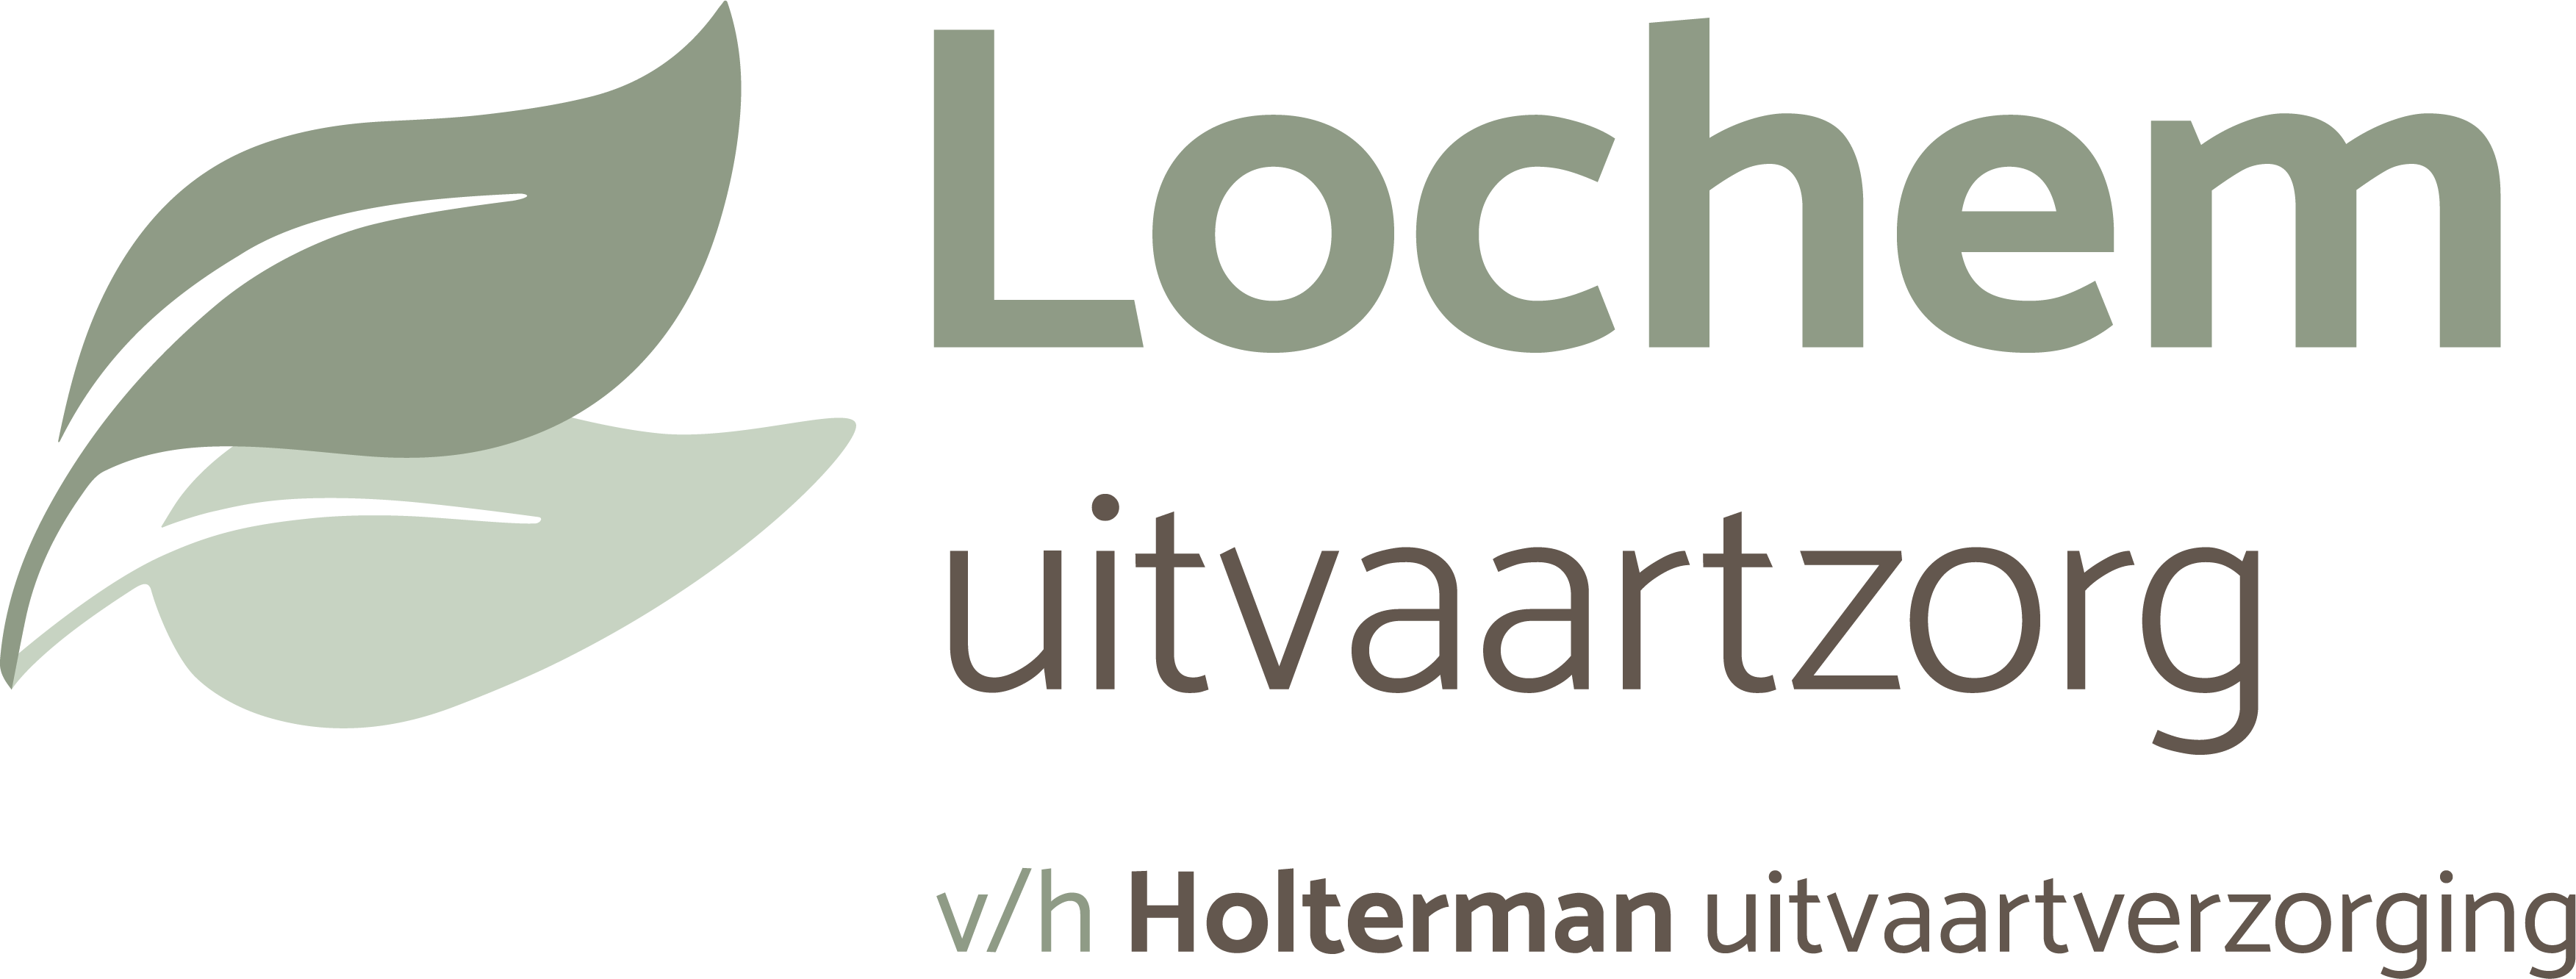 logo-lochem-uitvaartzorg-2